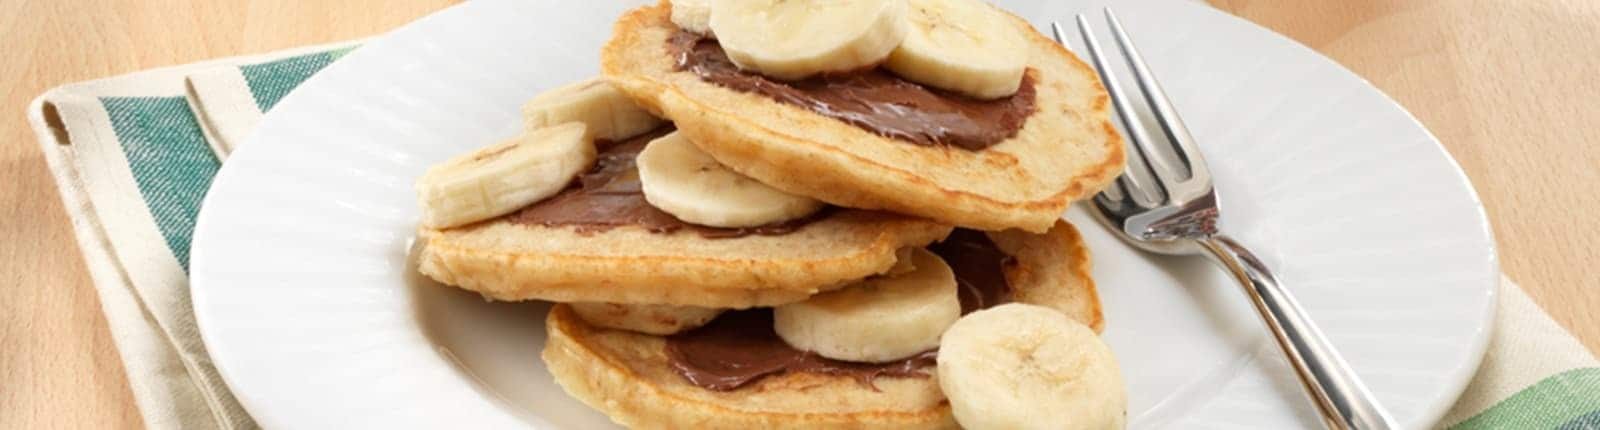 Pancakes de banano con Nutella®